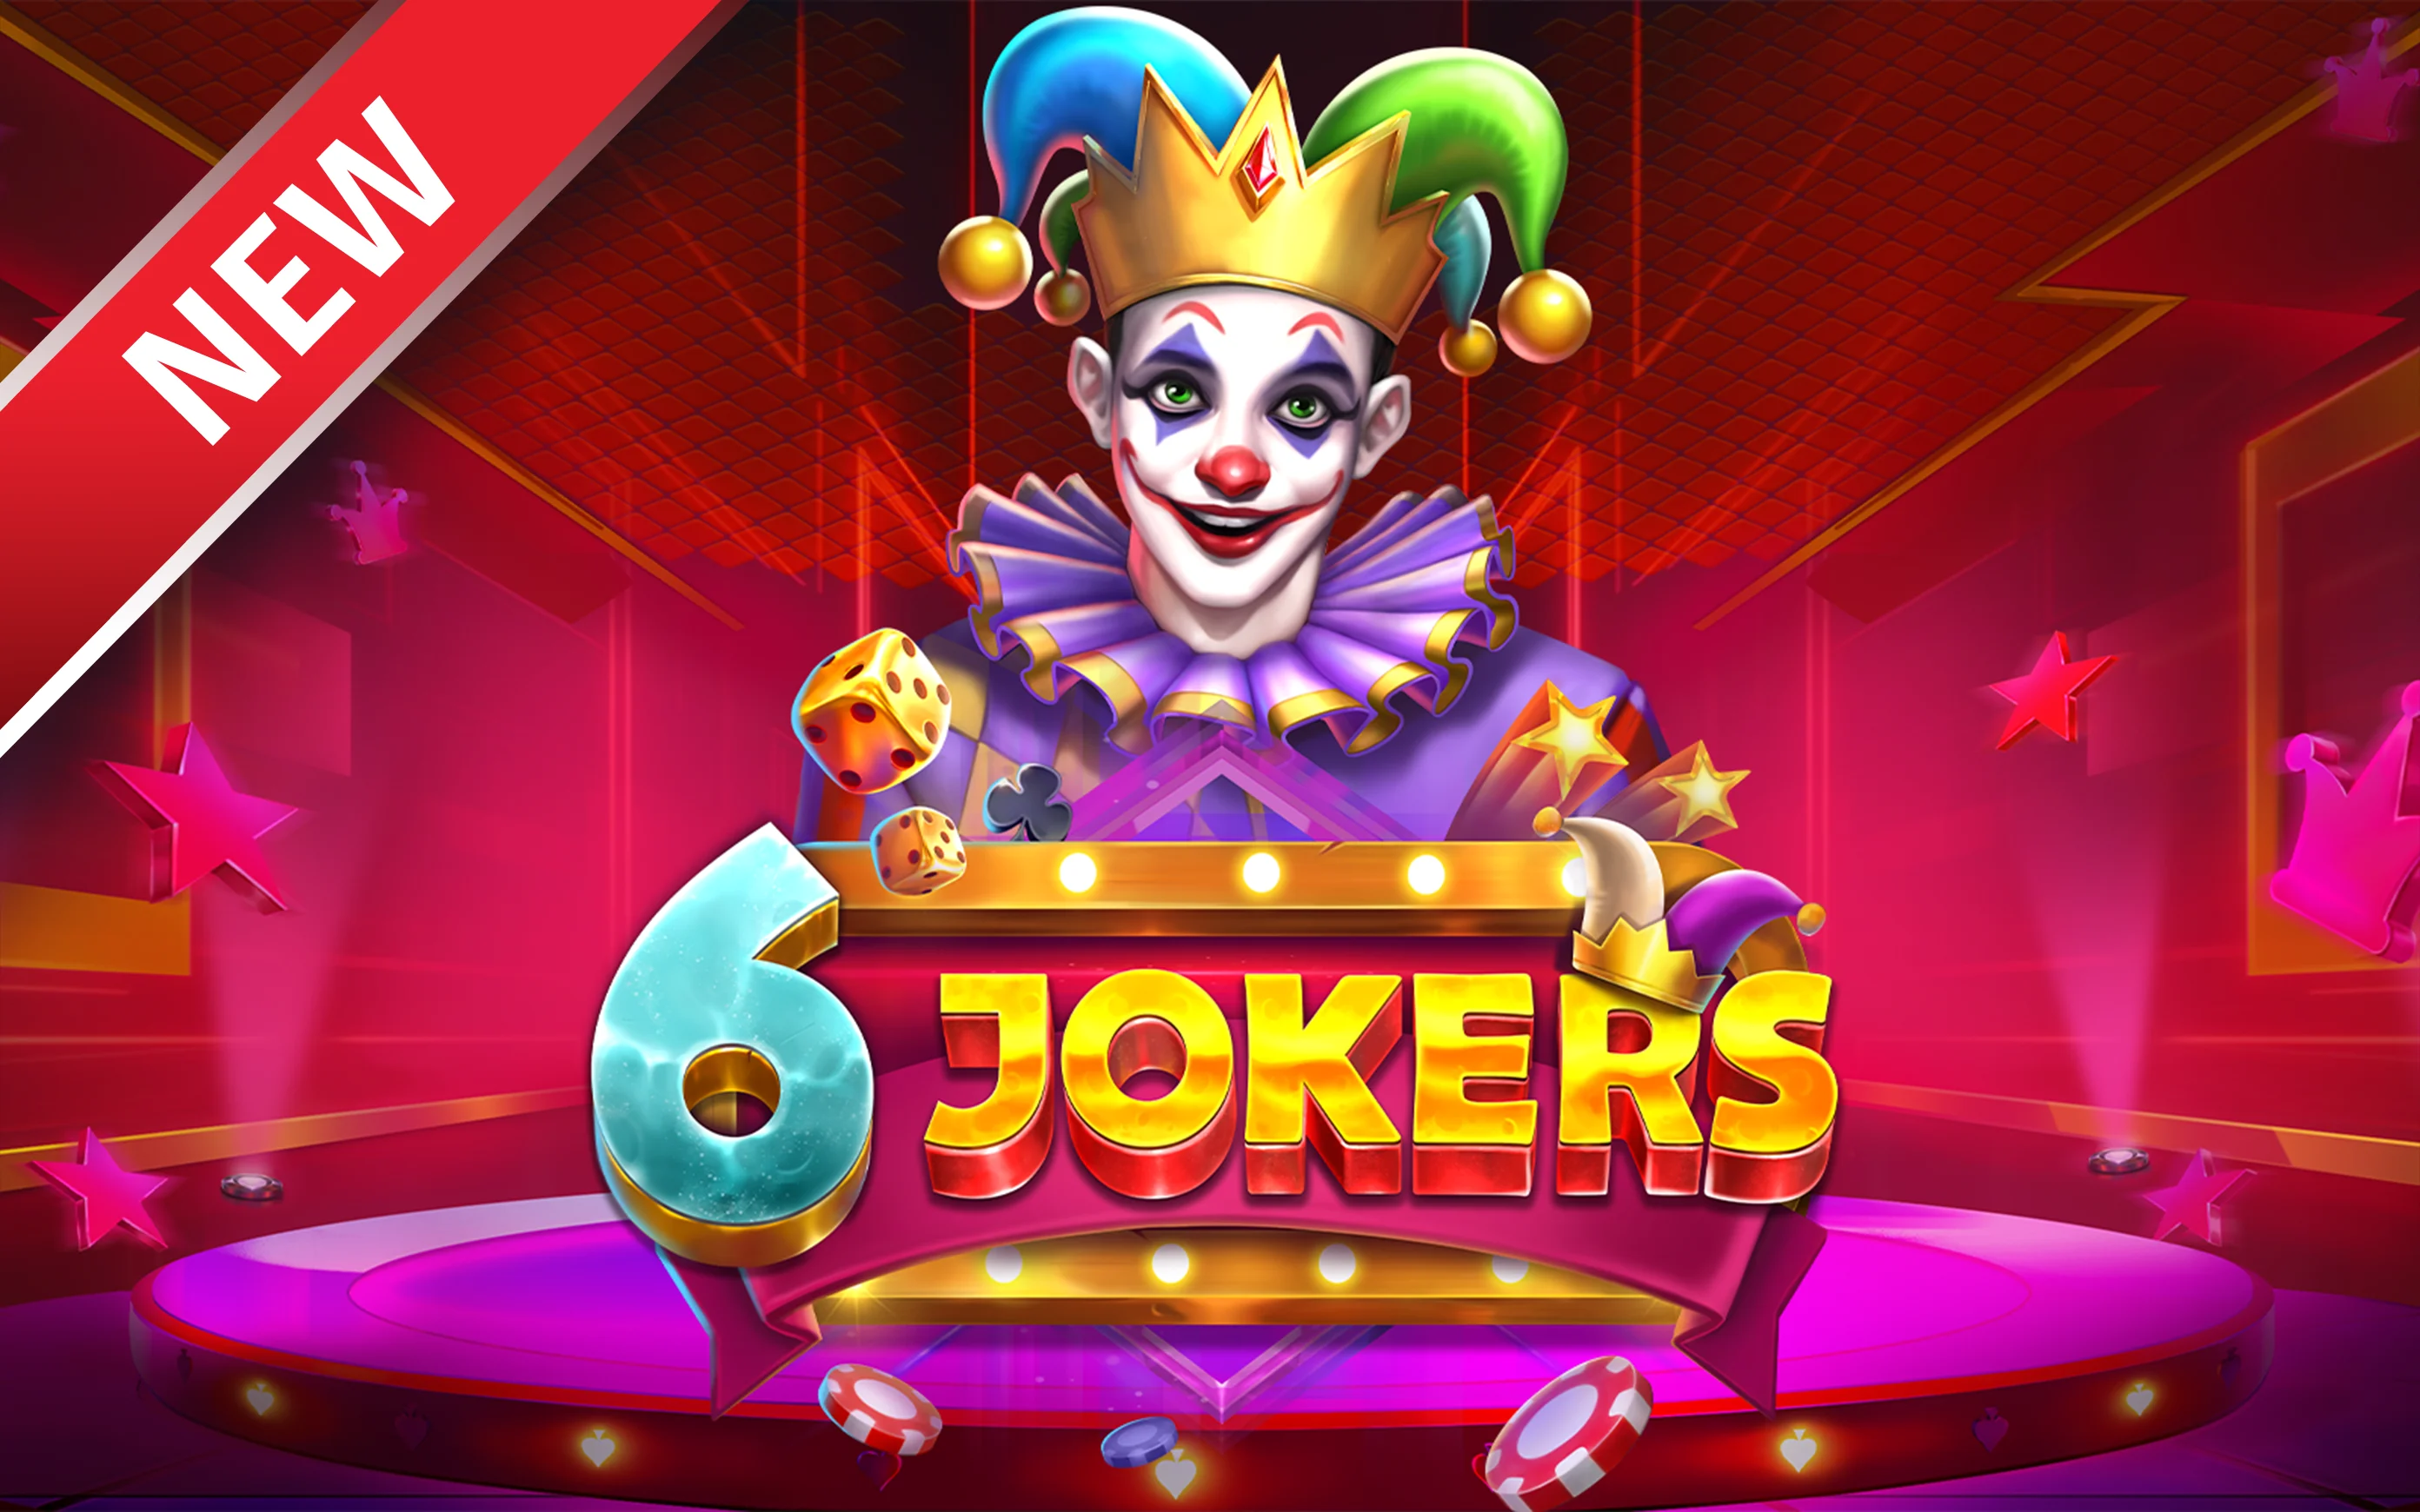 Gioca a 6 Jokers sul casino online Starcasino.be